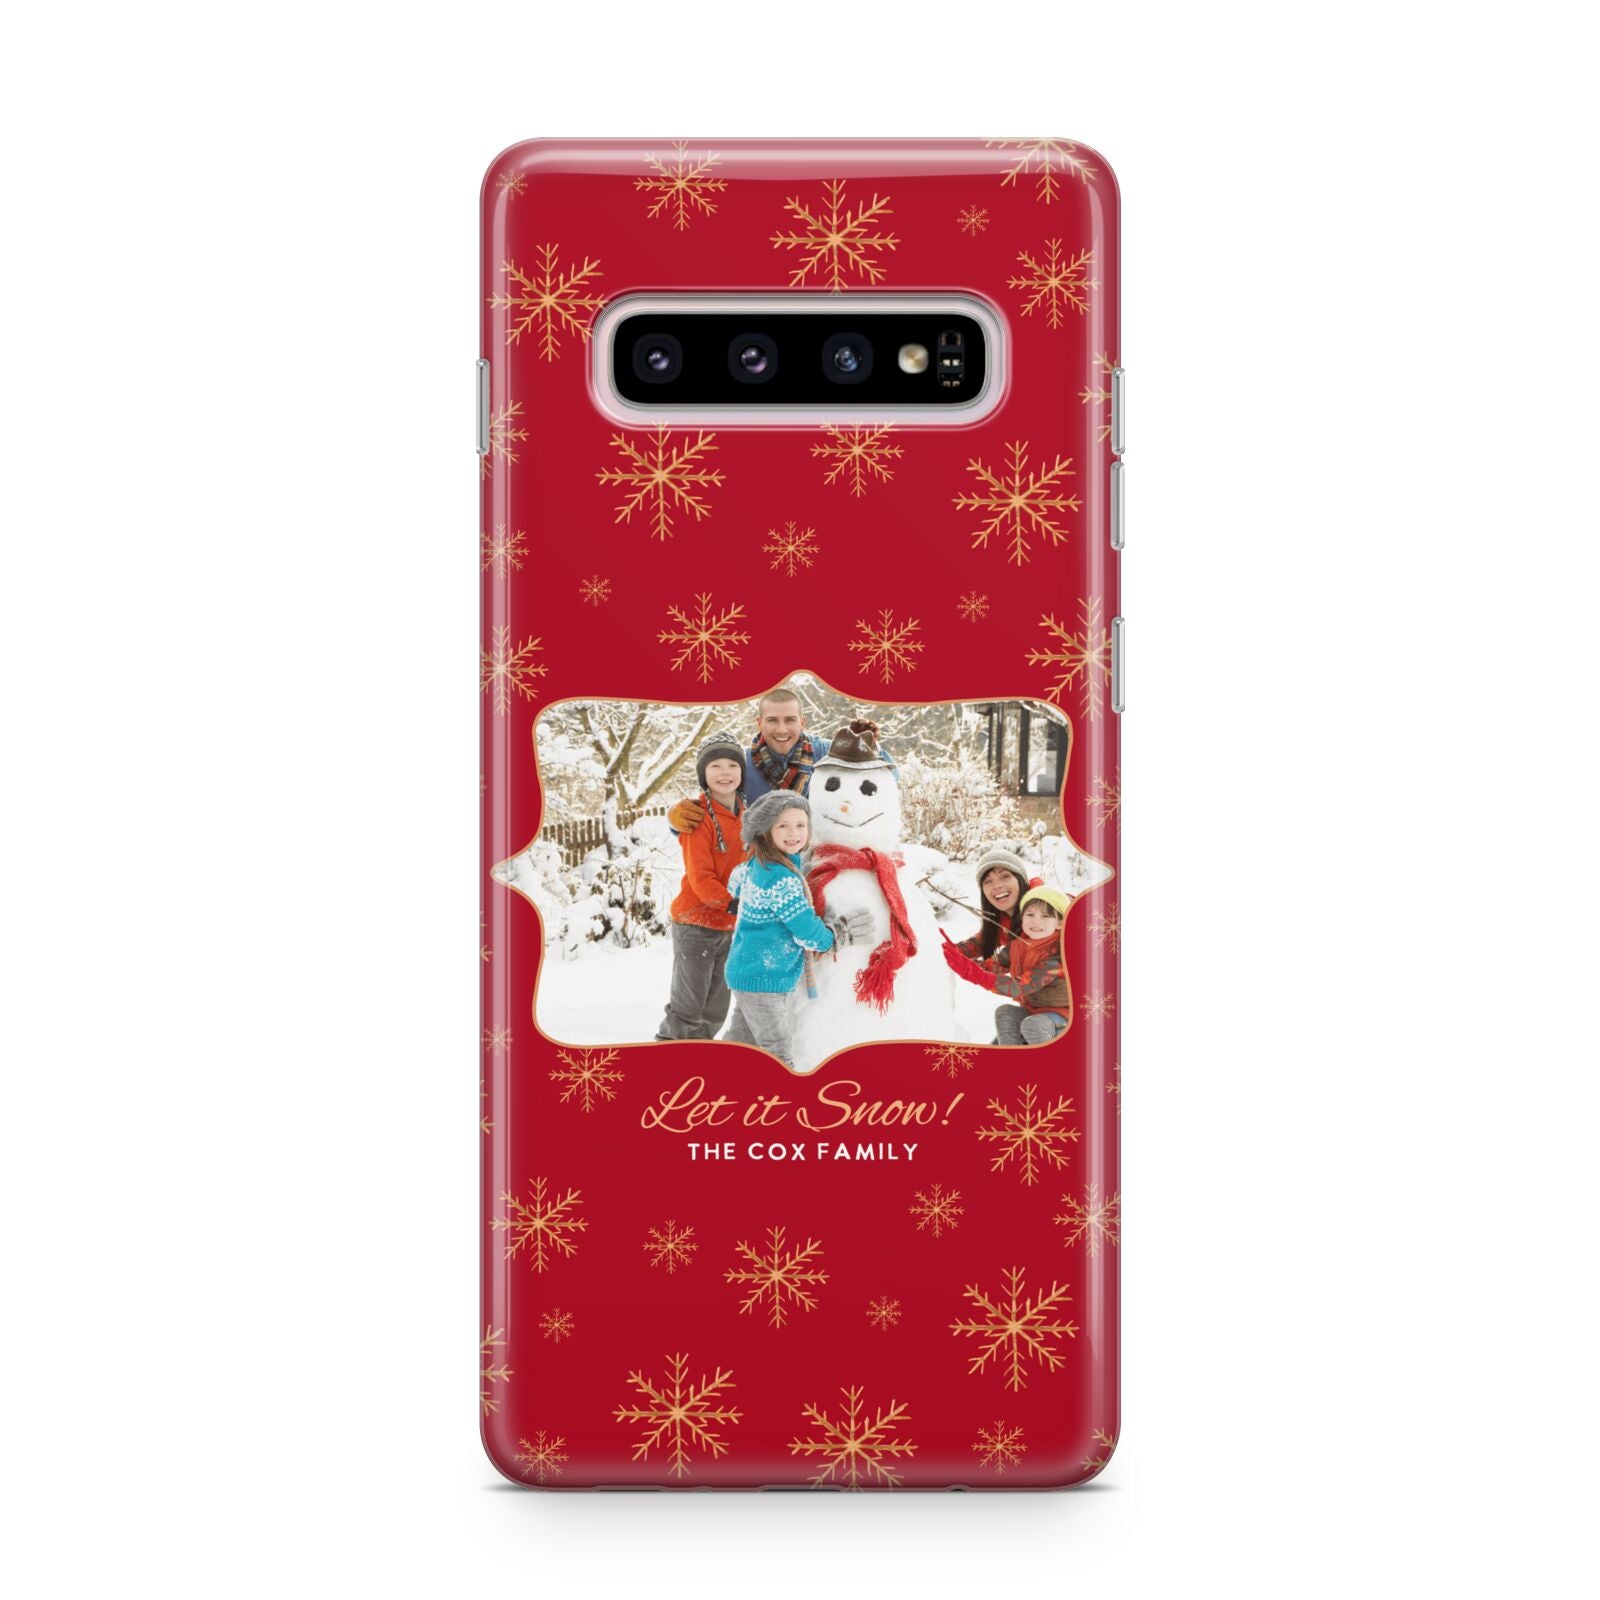 Let it Snow Christmas Photo Upload Samsung Galaxy S10 Plus Case